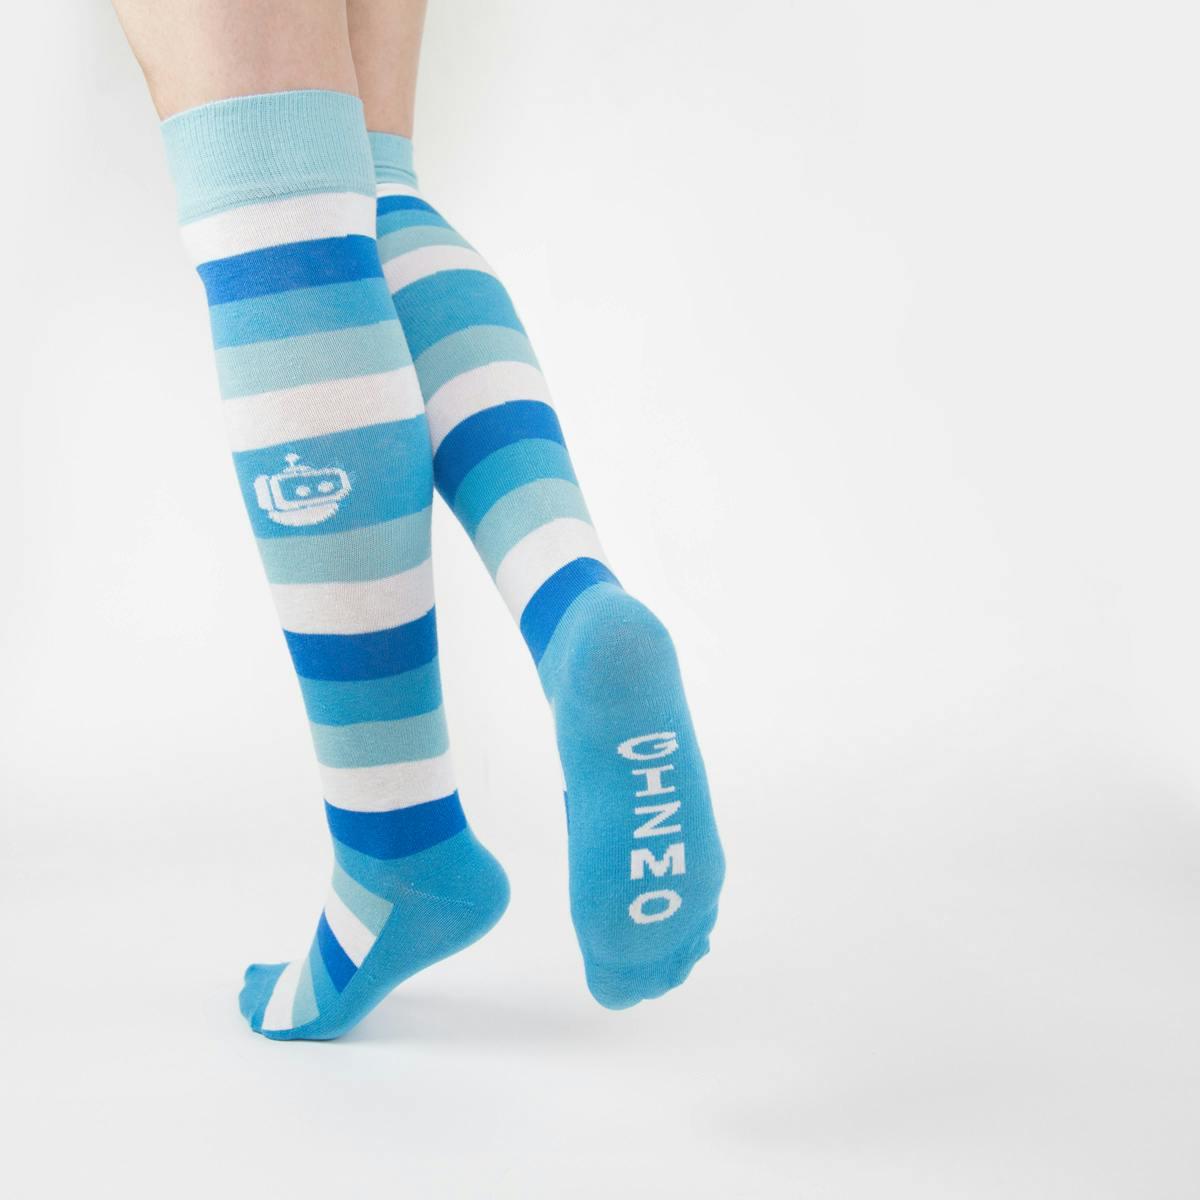 Custom Knee High Socks for Mayfield Robotics